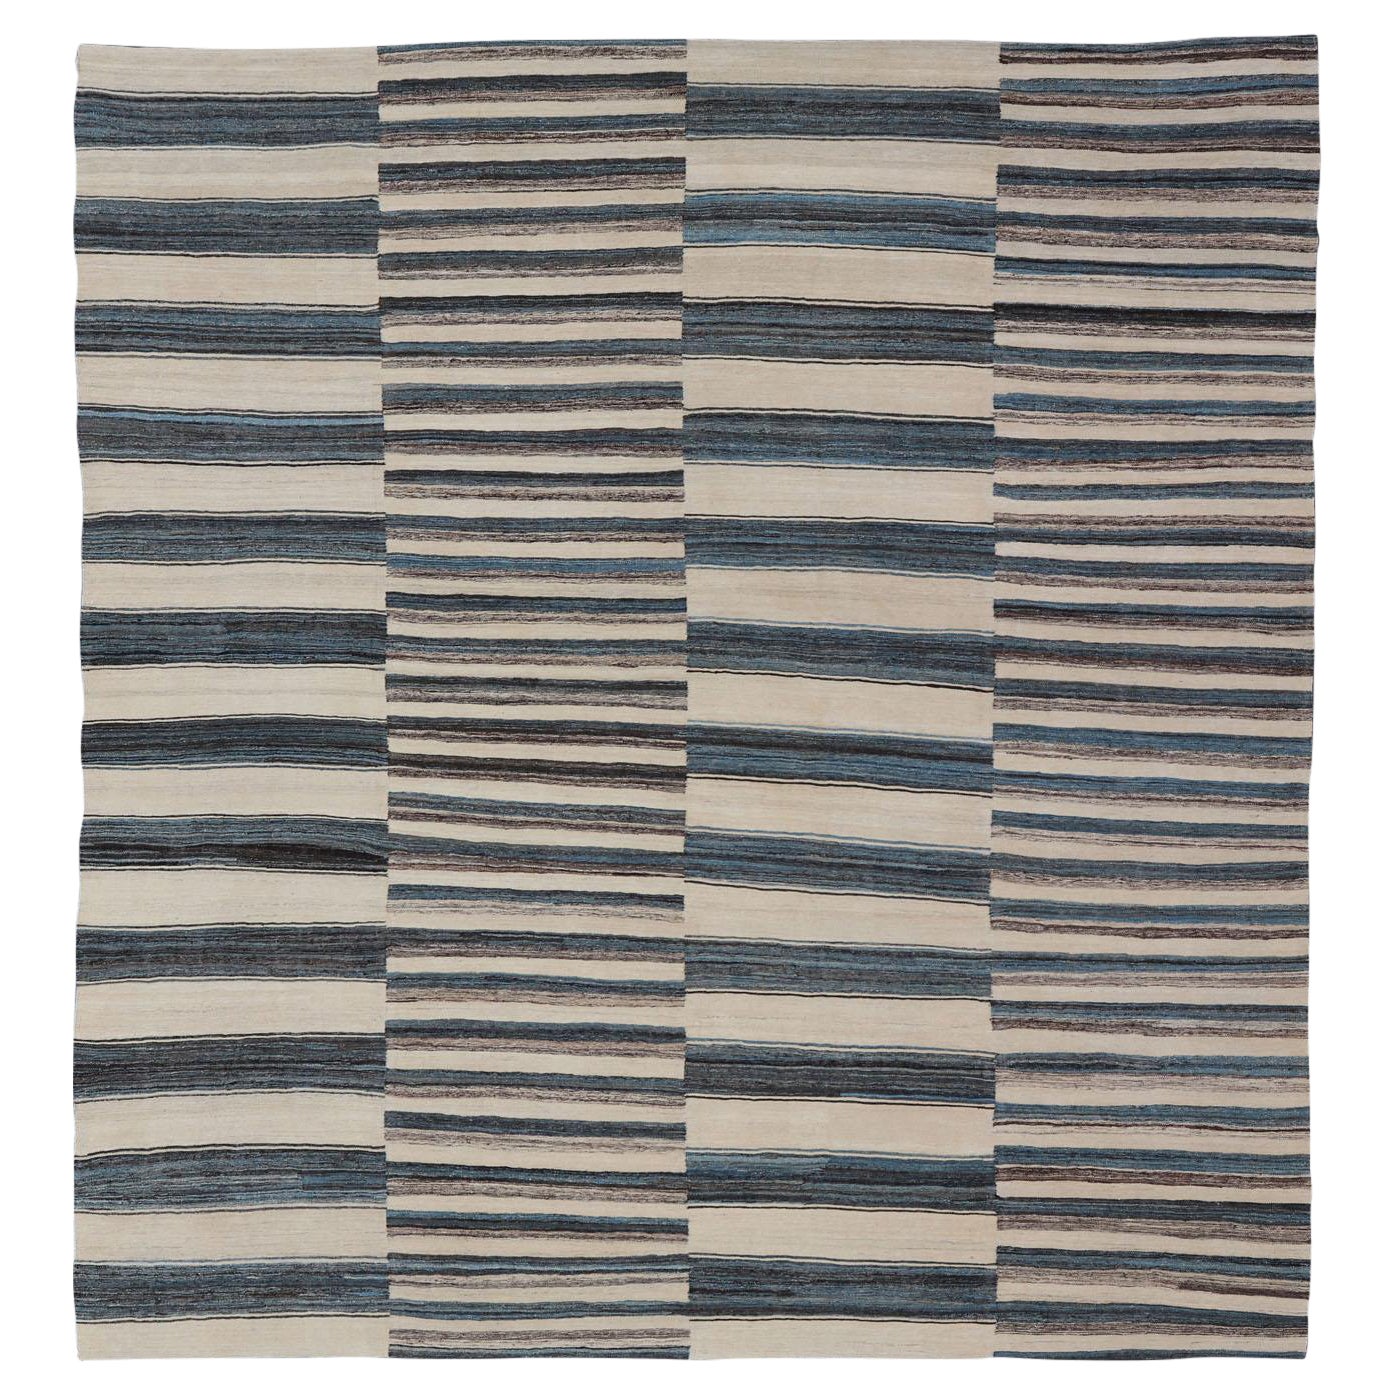 Sqaure Flat-Weave Kilim Rug with Classic Stripe Design in Blue, Cream, Brown